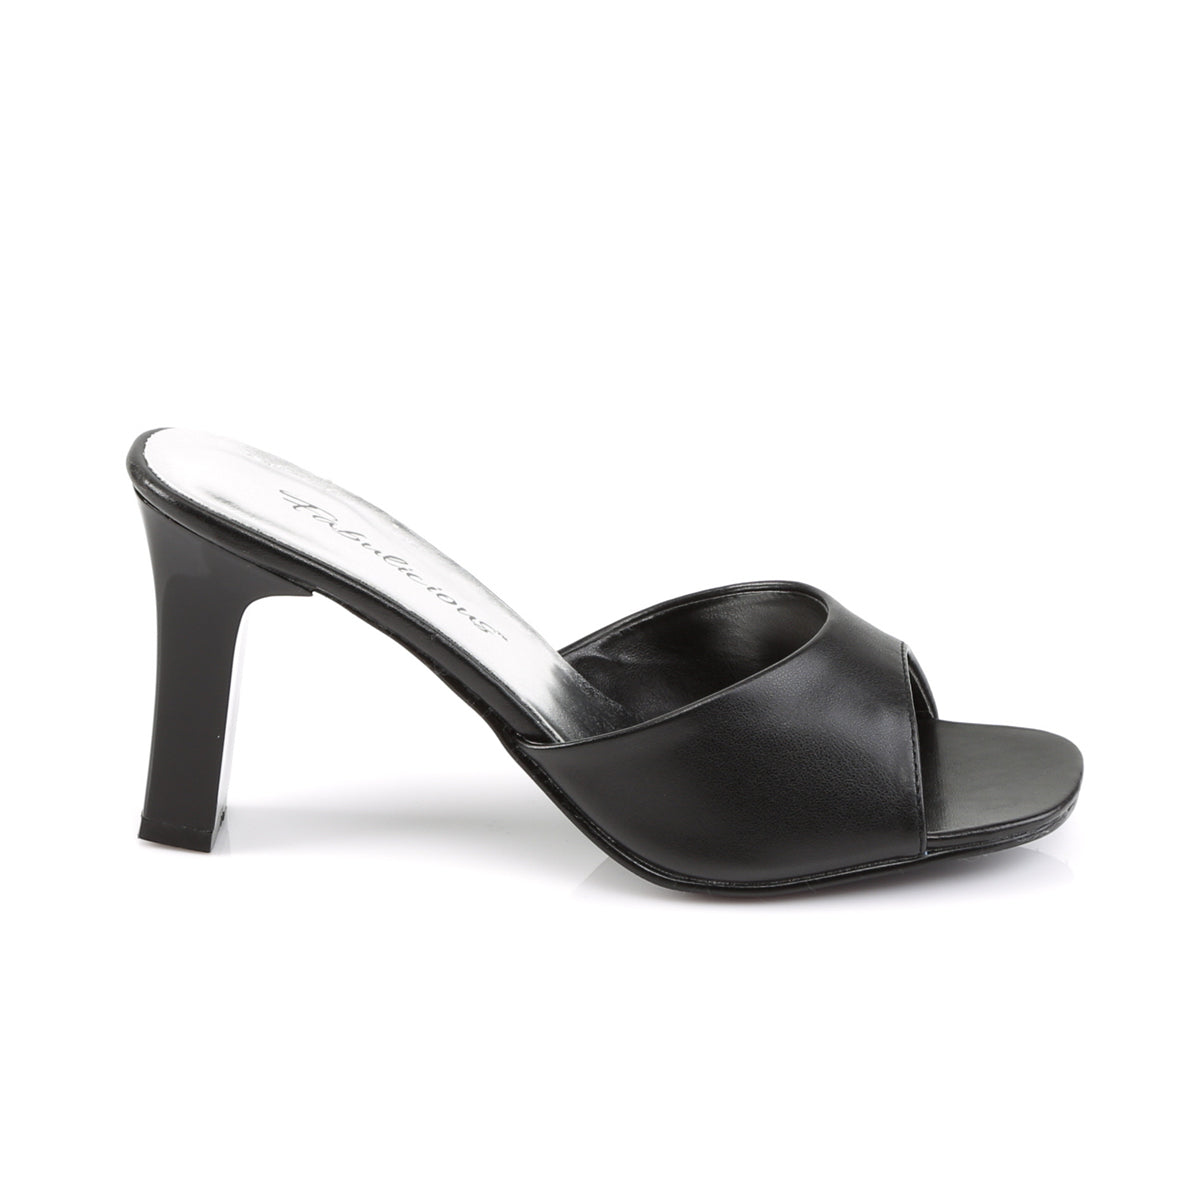 ROMANCE-301-2 Fabulicious 3 Inch Heel Black Sexy Shoes-Fabulicious- Sexy Shoes Fetish Heels